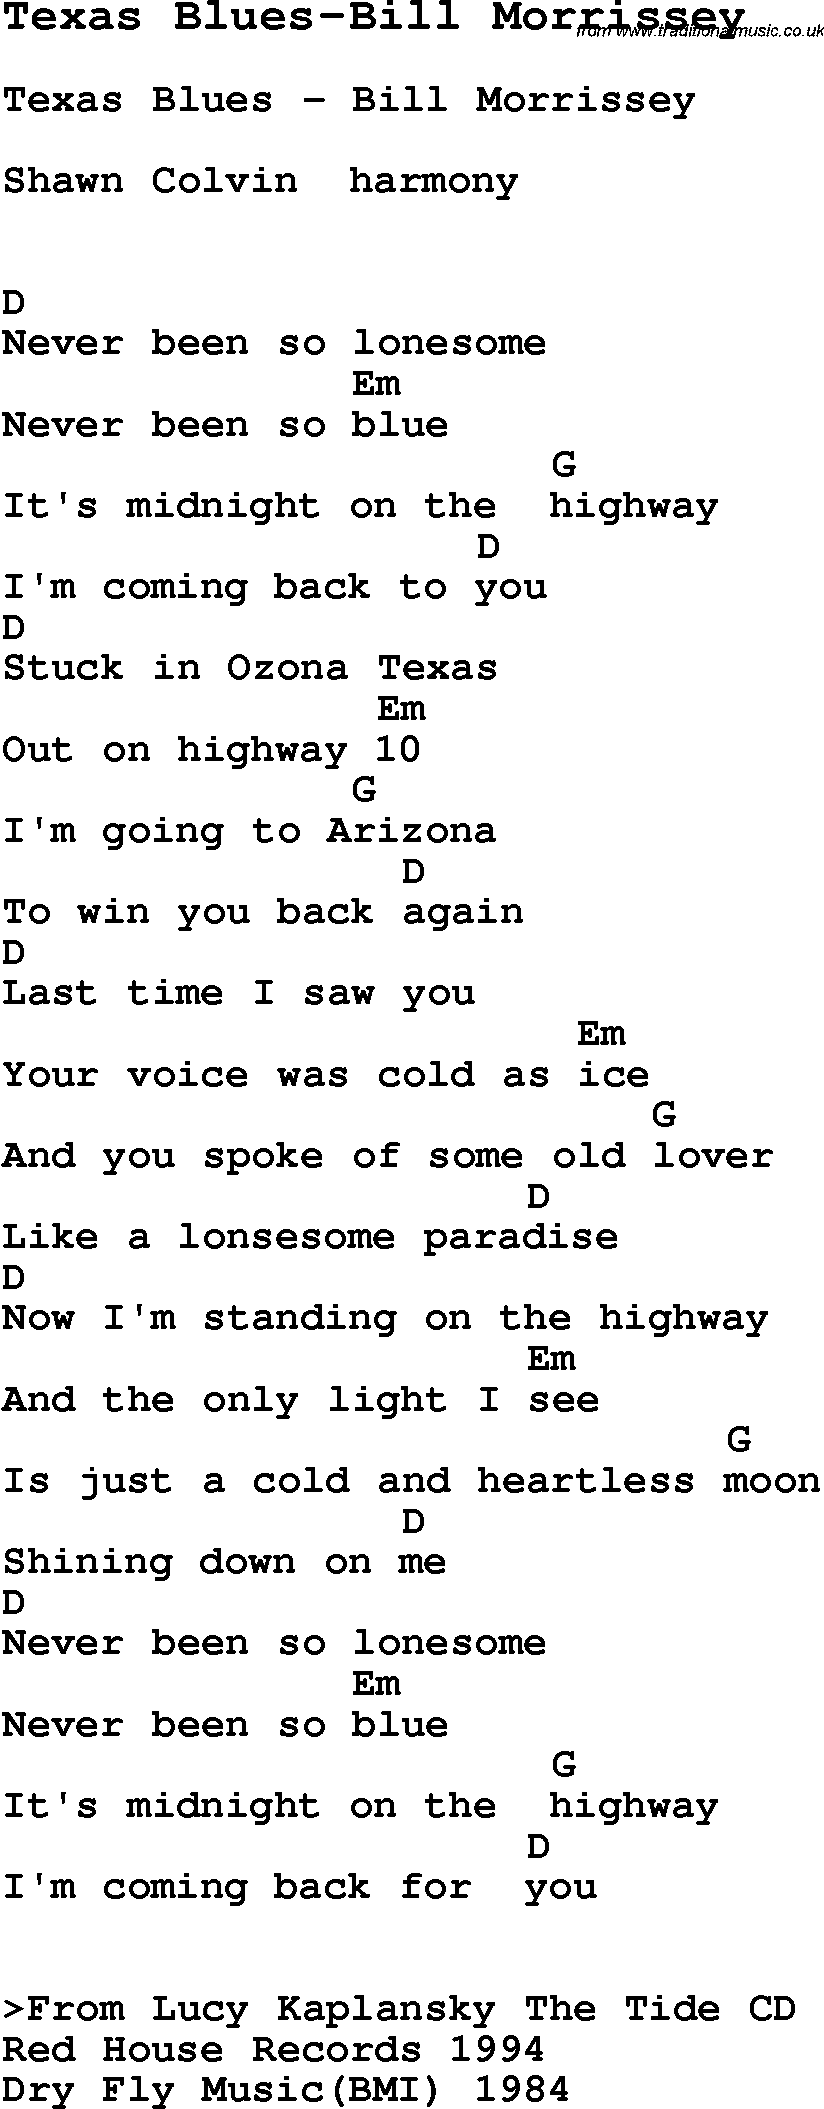 Blues Guitar Song, lyrics, chords, tablature, playing hints for Texas Blues-Bill Morrissey